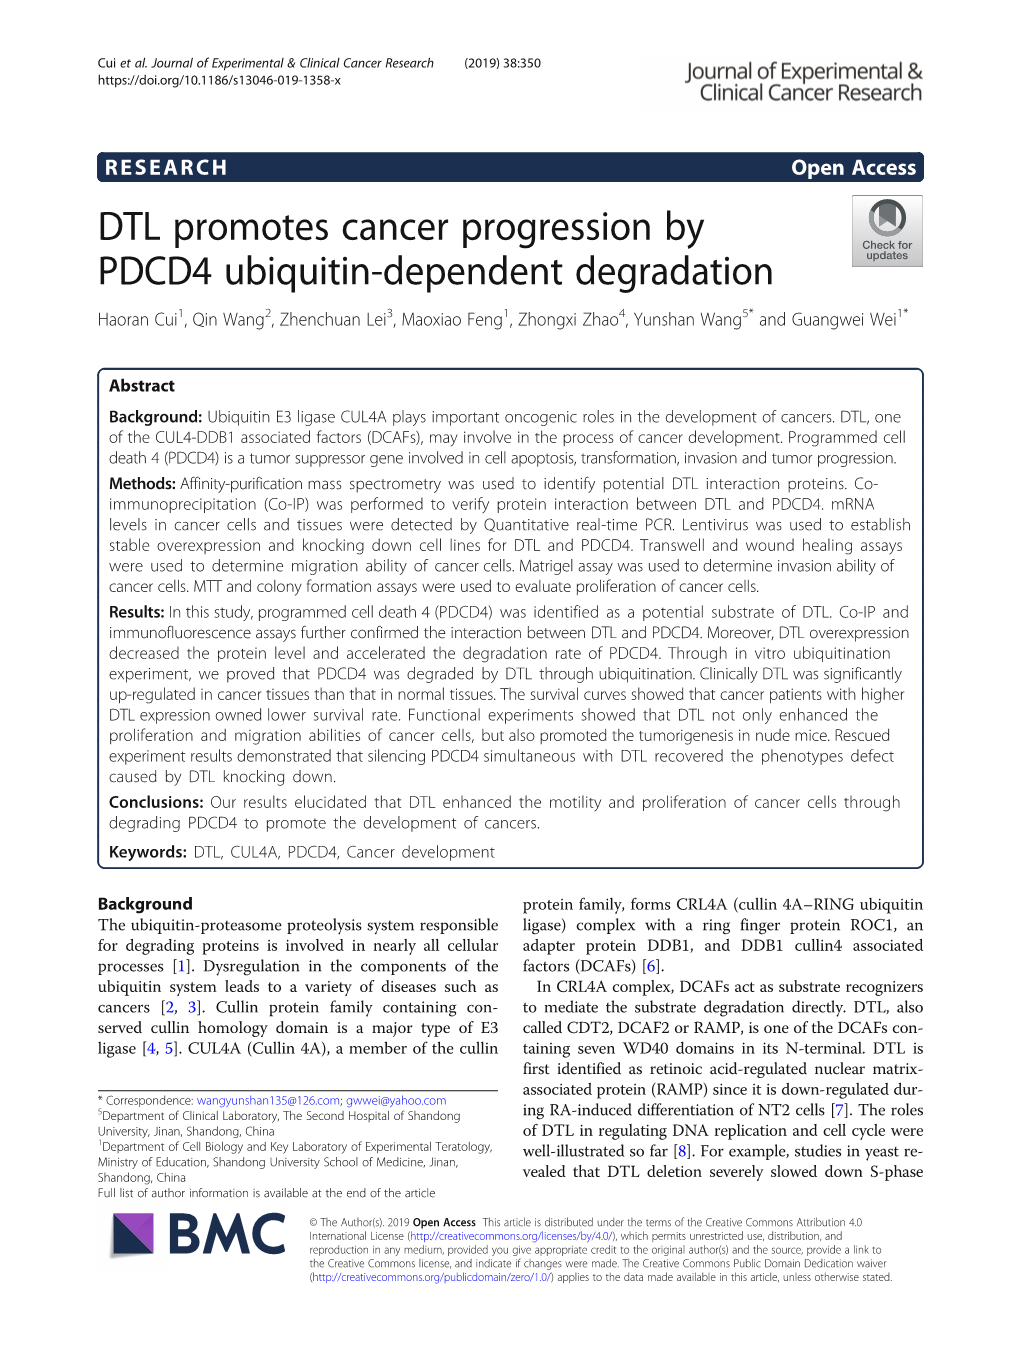 DTL Promotes Cancer Progression by PDCD4 Ubiquitin-Dependent